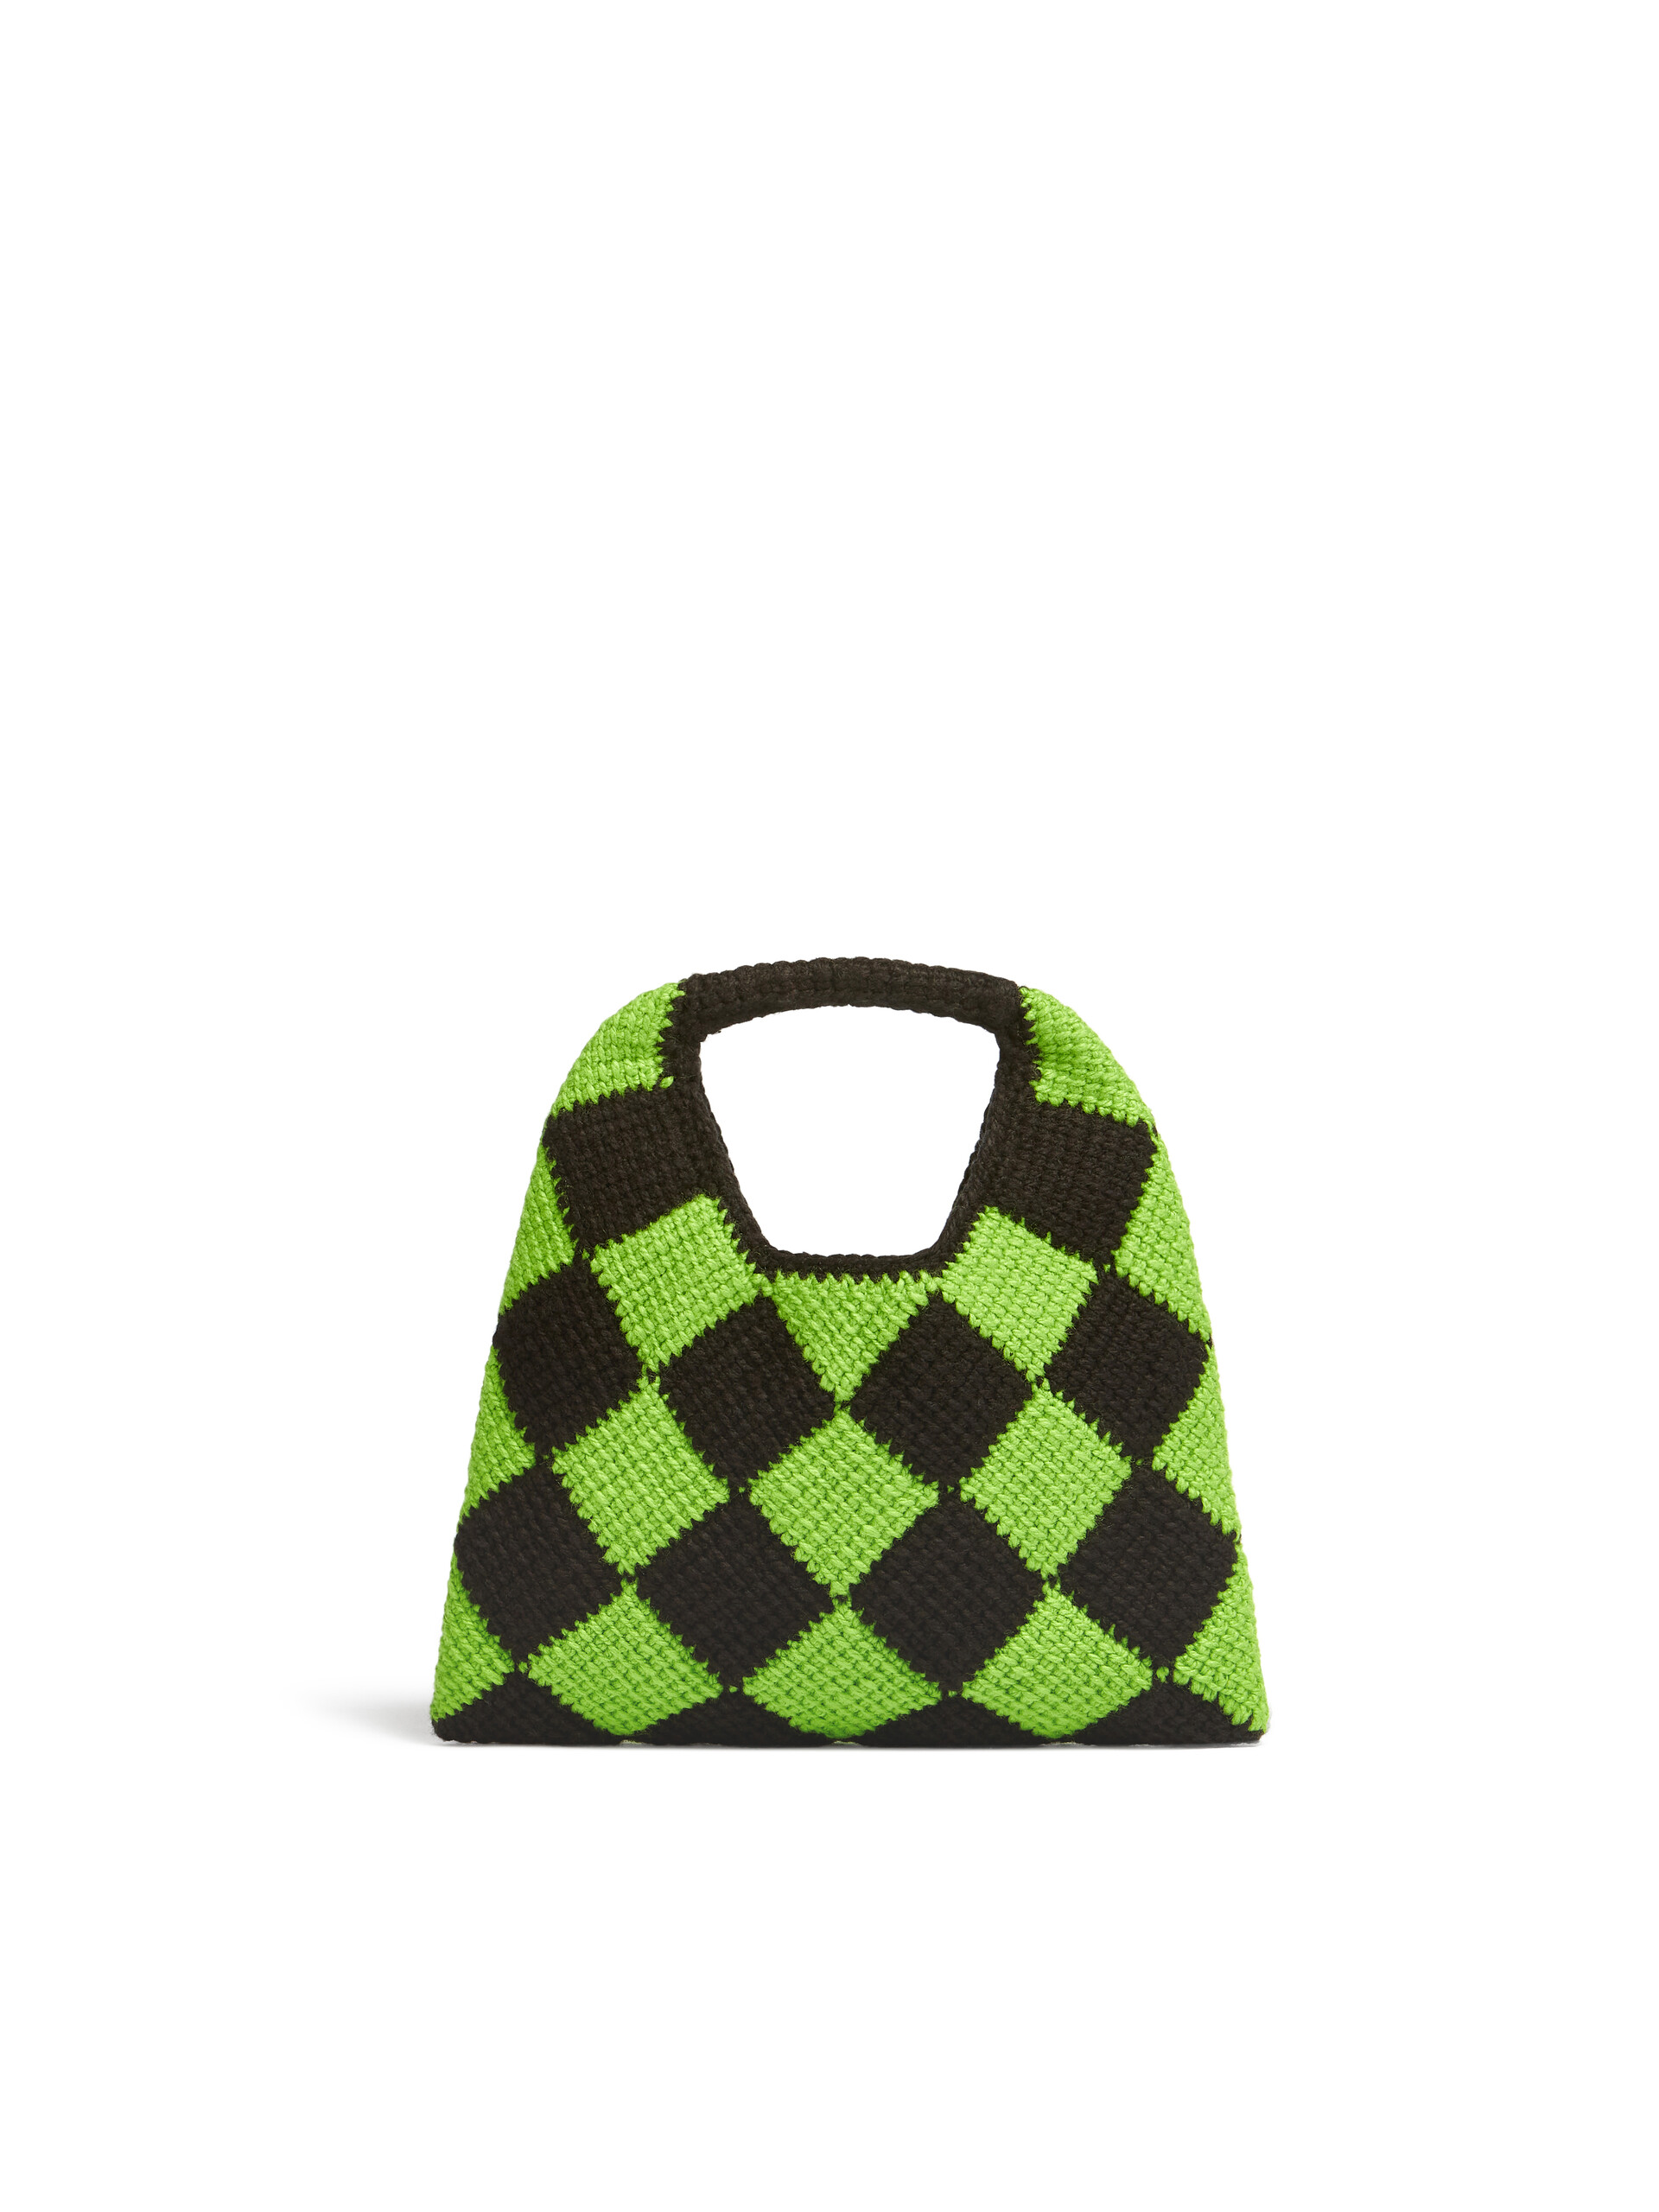 MARNI MARKET DIAMOND small bag in green and black tech wool - Bags - Image 3